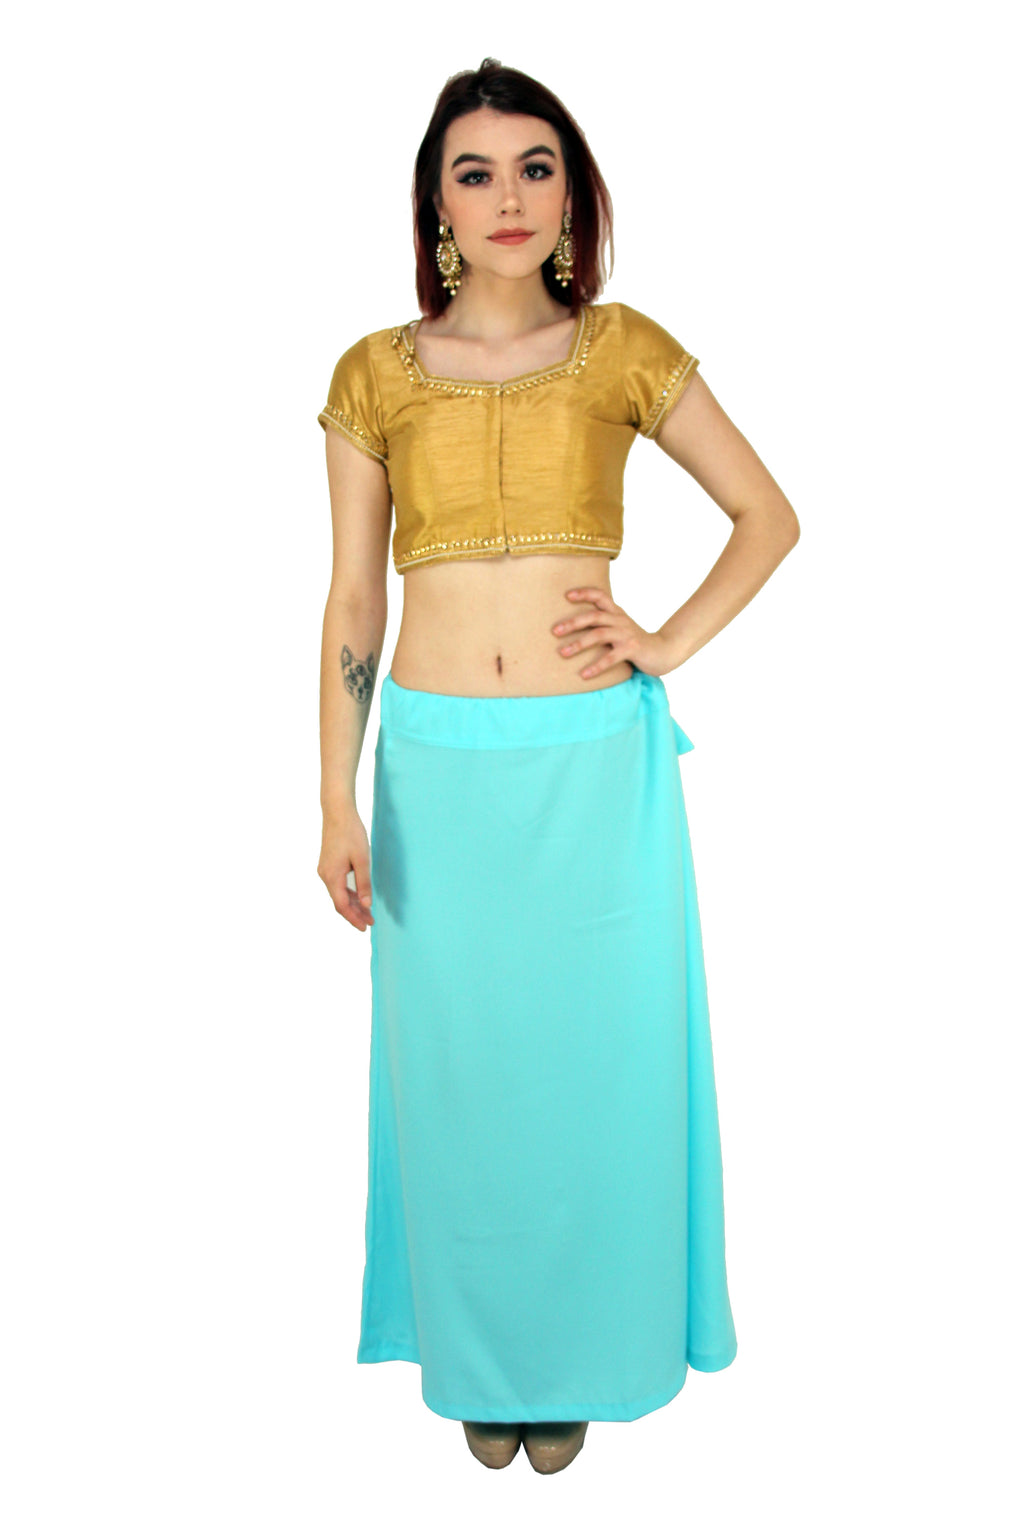 LCB Women's Cotton Saree Petticoat (Pack of 1) - Sky Blue - XXL Size -  Guaranteed Fast : : Fashion